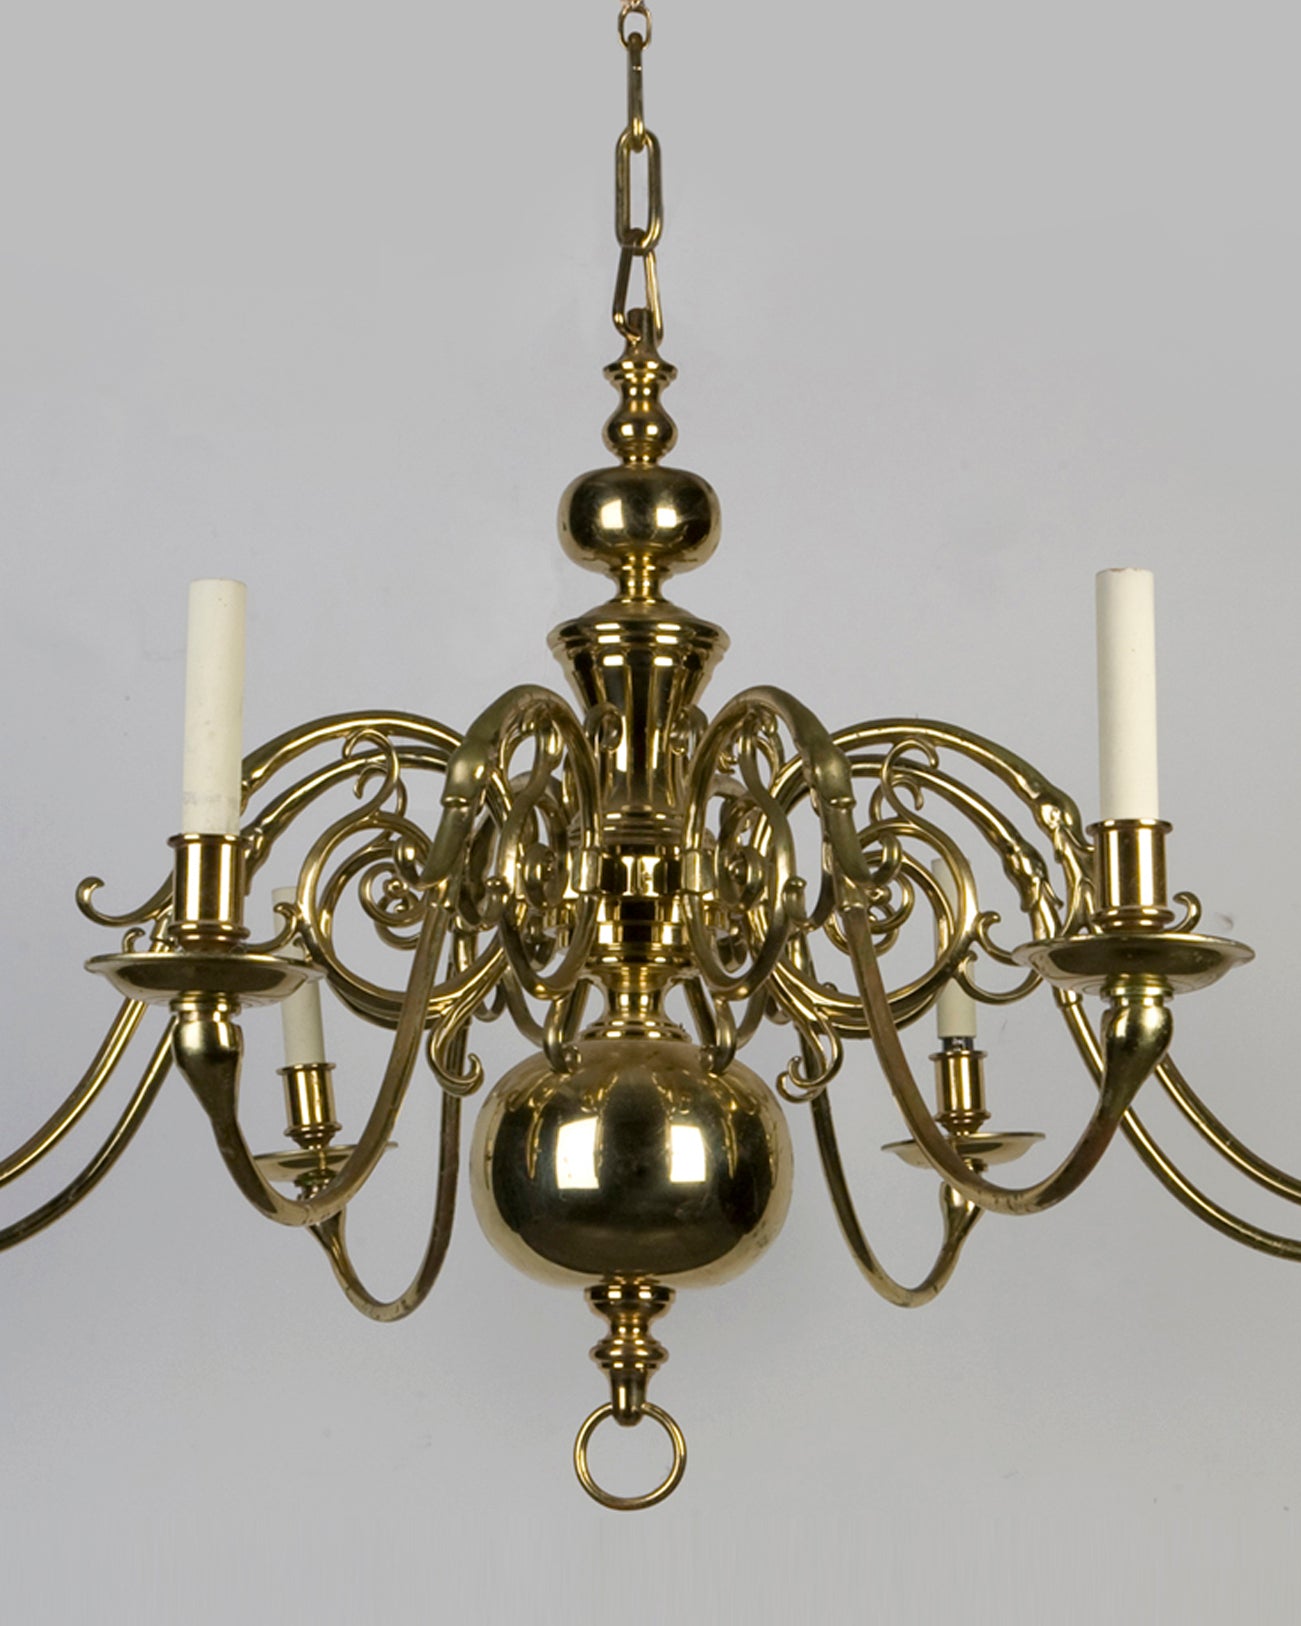 A Dutch, 18th century style solid brass chandelier